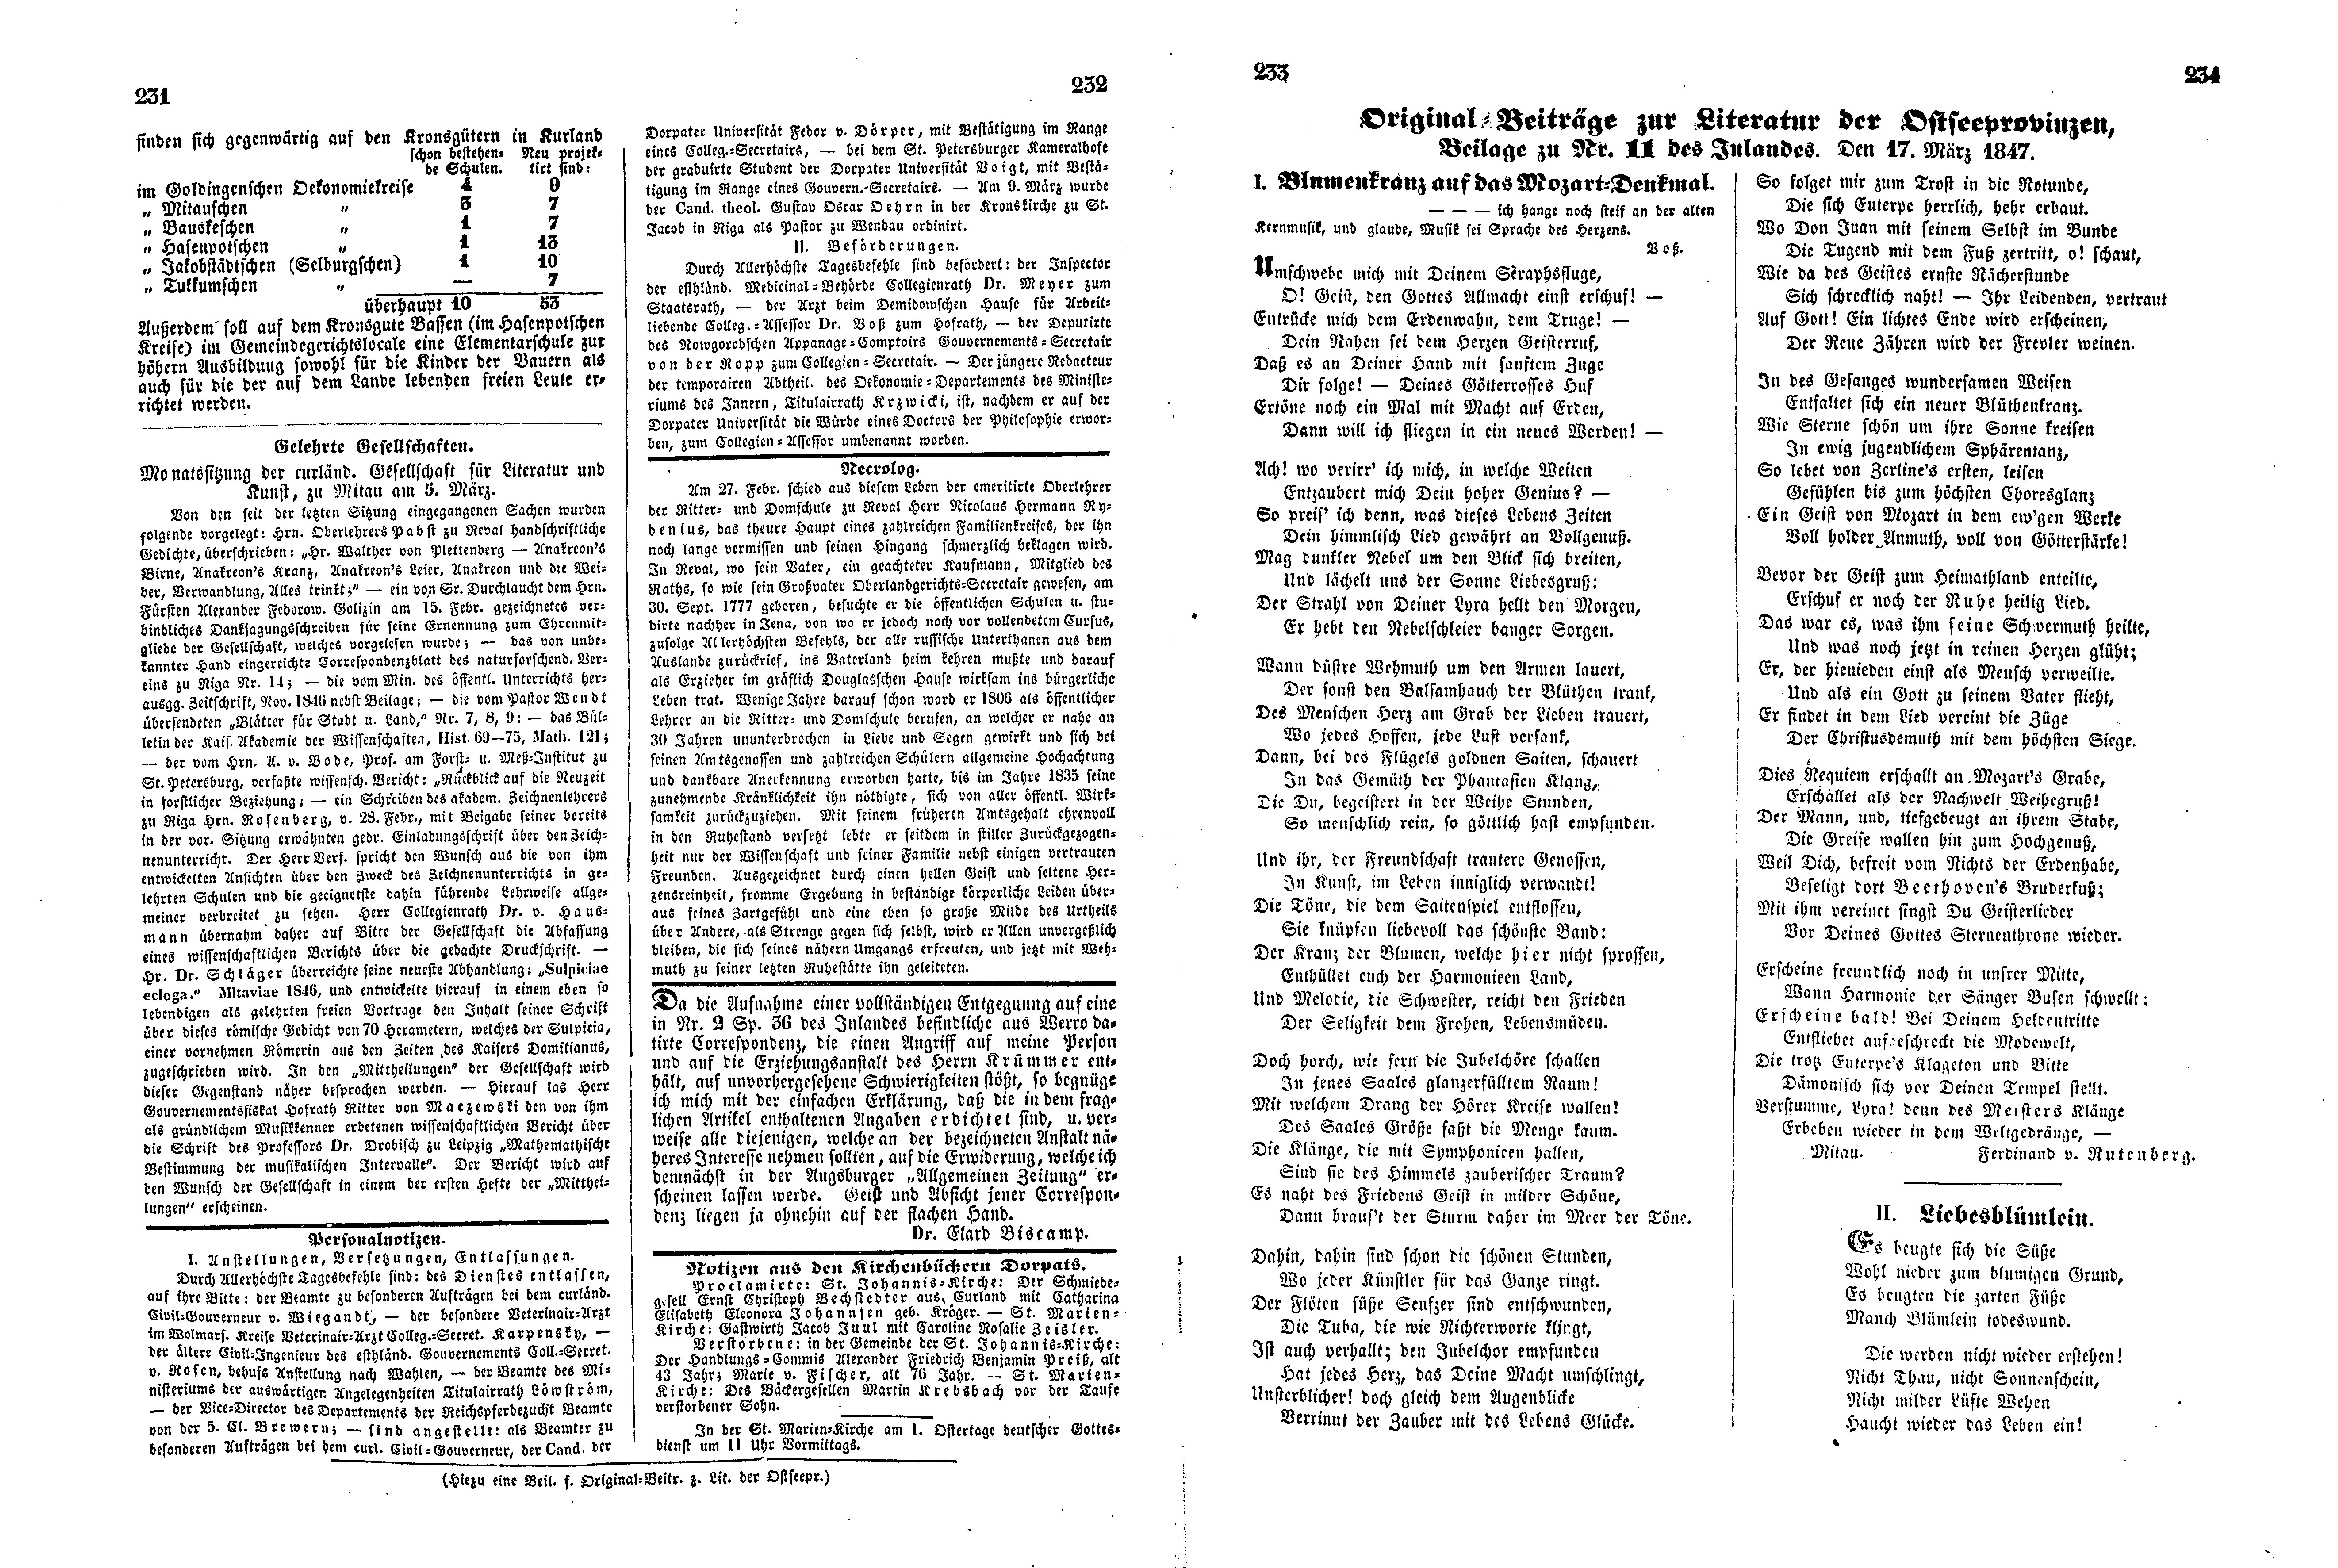 Das Inland [12] (1847) | 63. (231-234) Main body of text